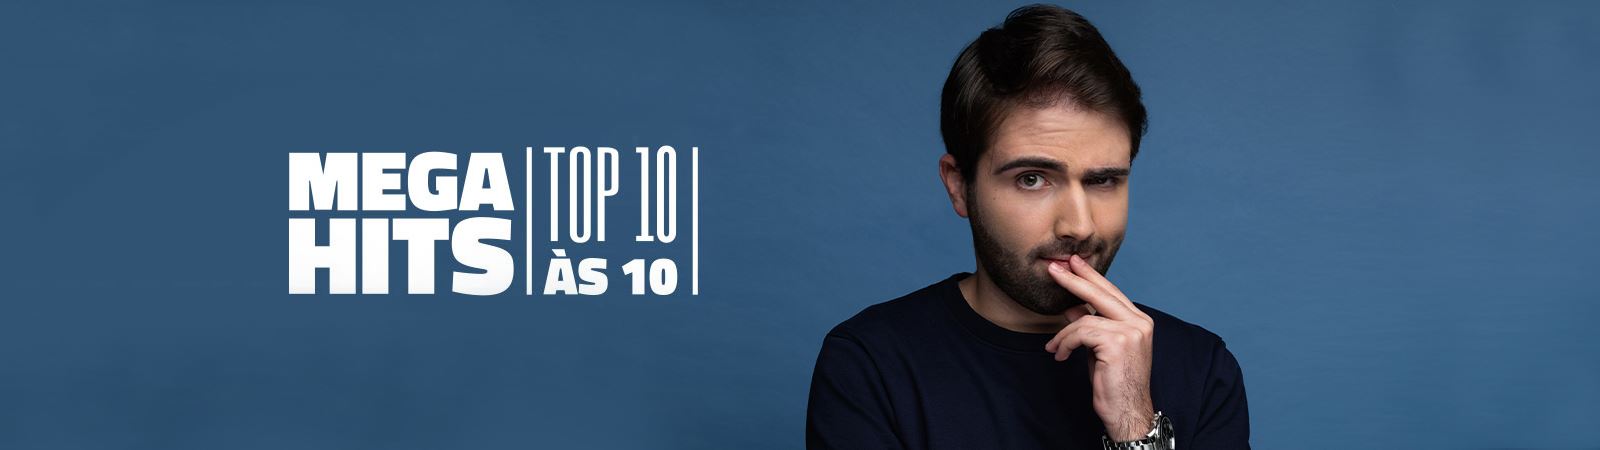 Top 10 às 10